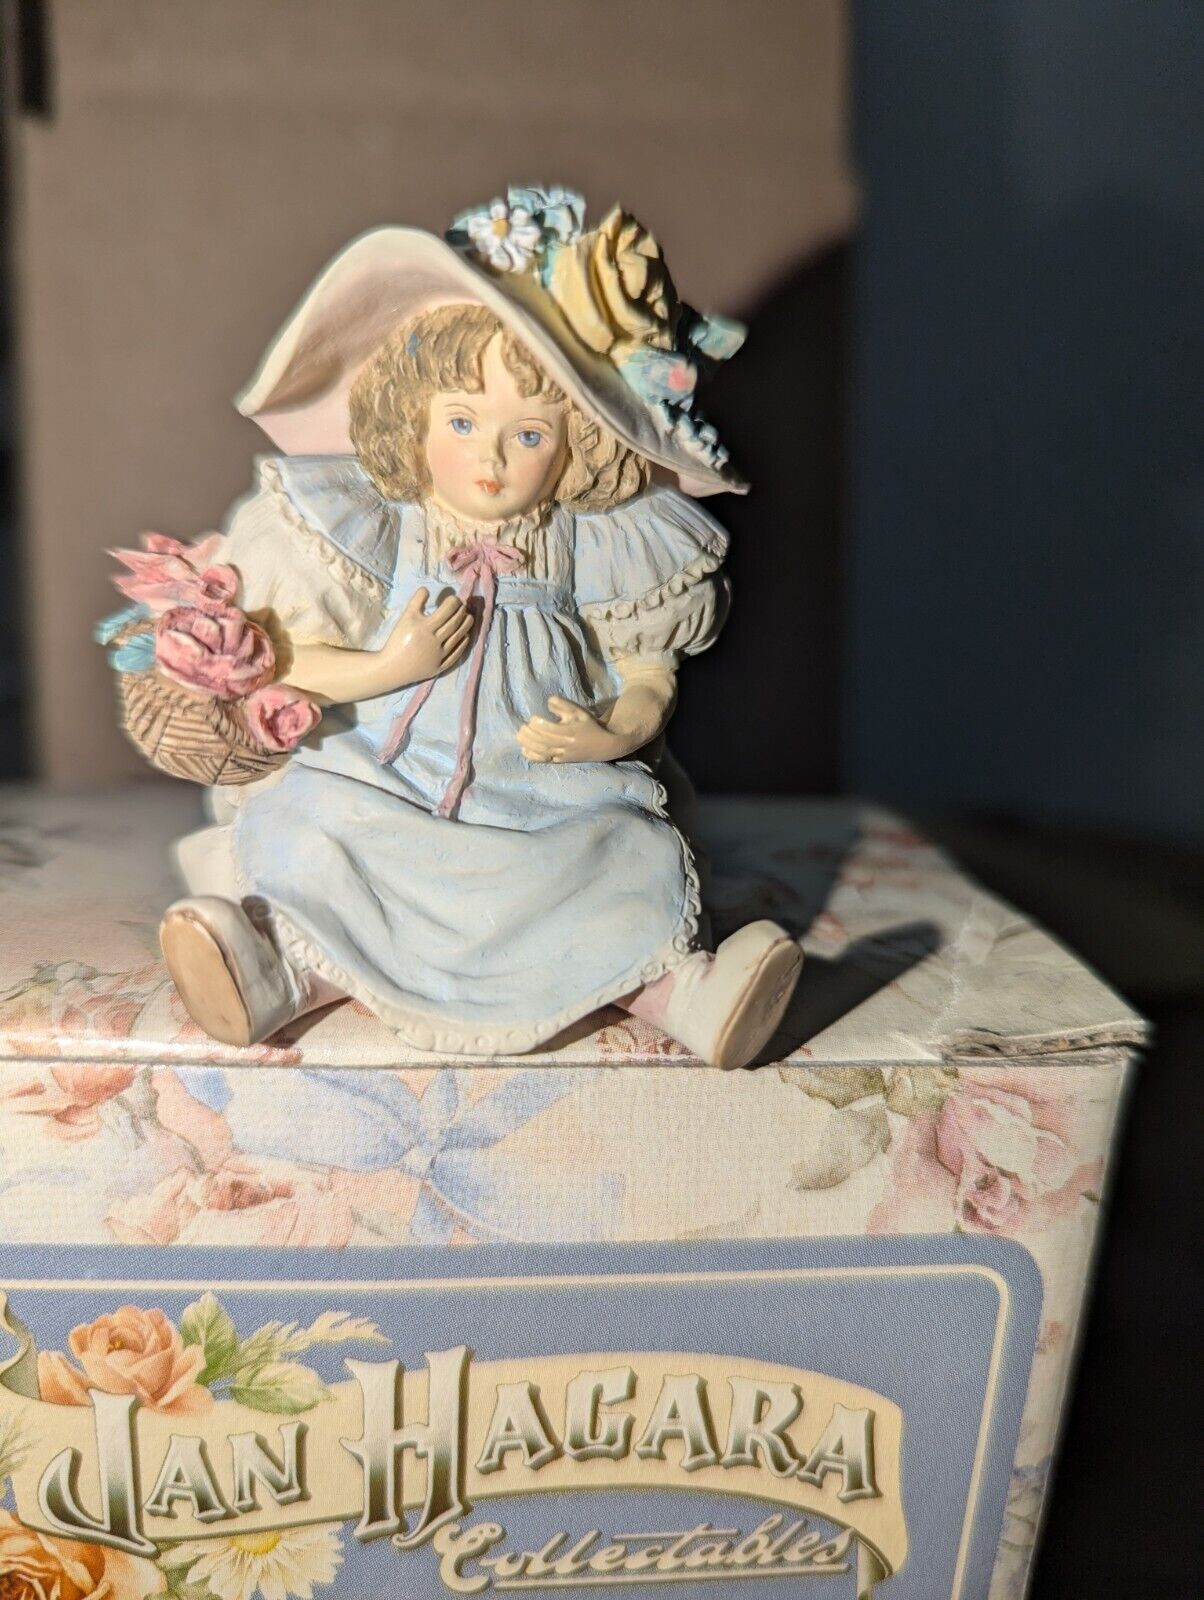 Jan Hagara Mattie Doll C22319 with Original Box